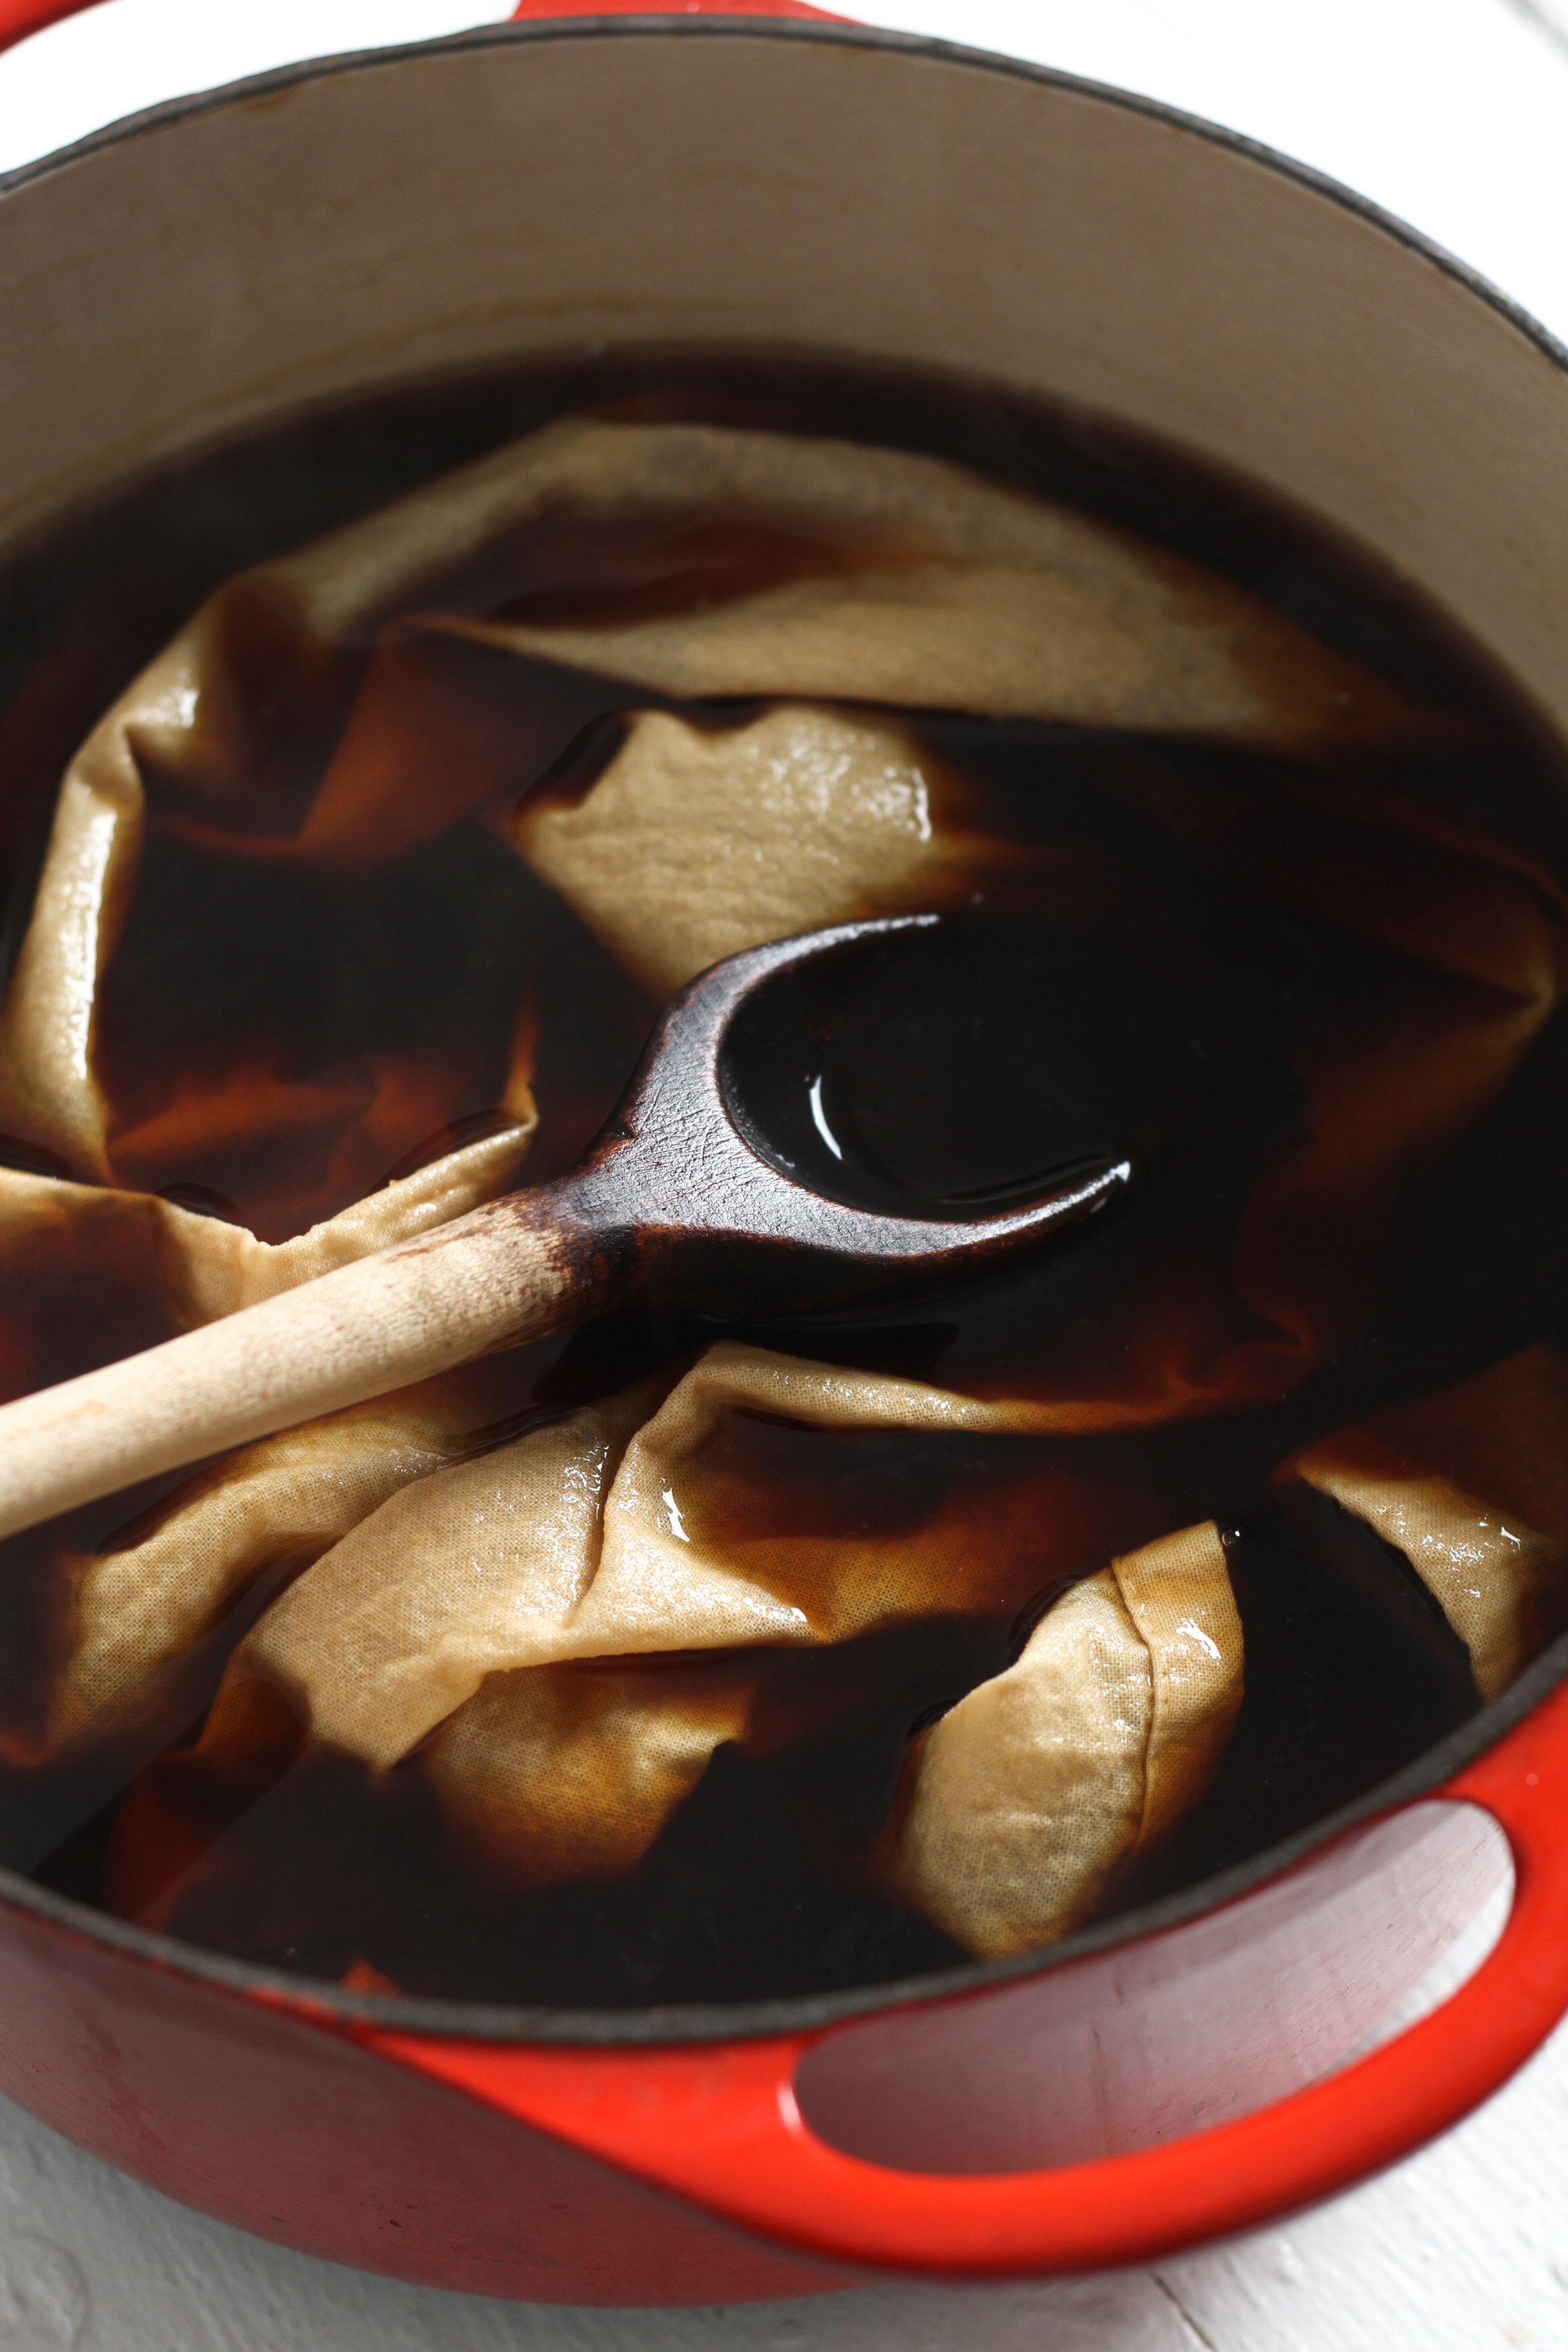 Tutorial – How to Dye Yarn with Coffee and Tea